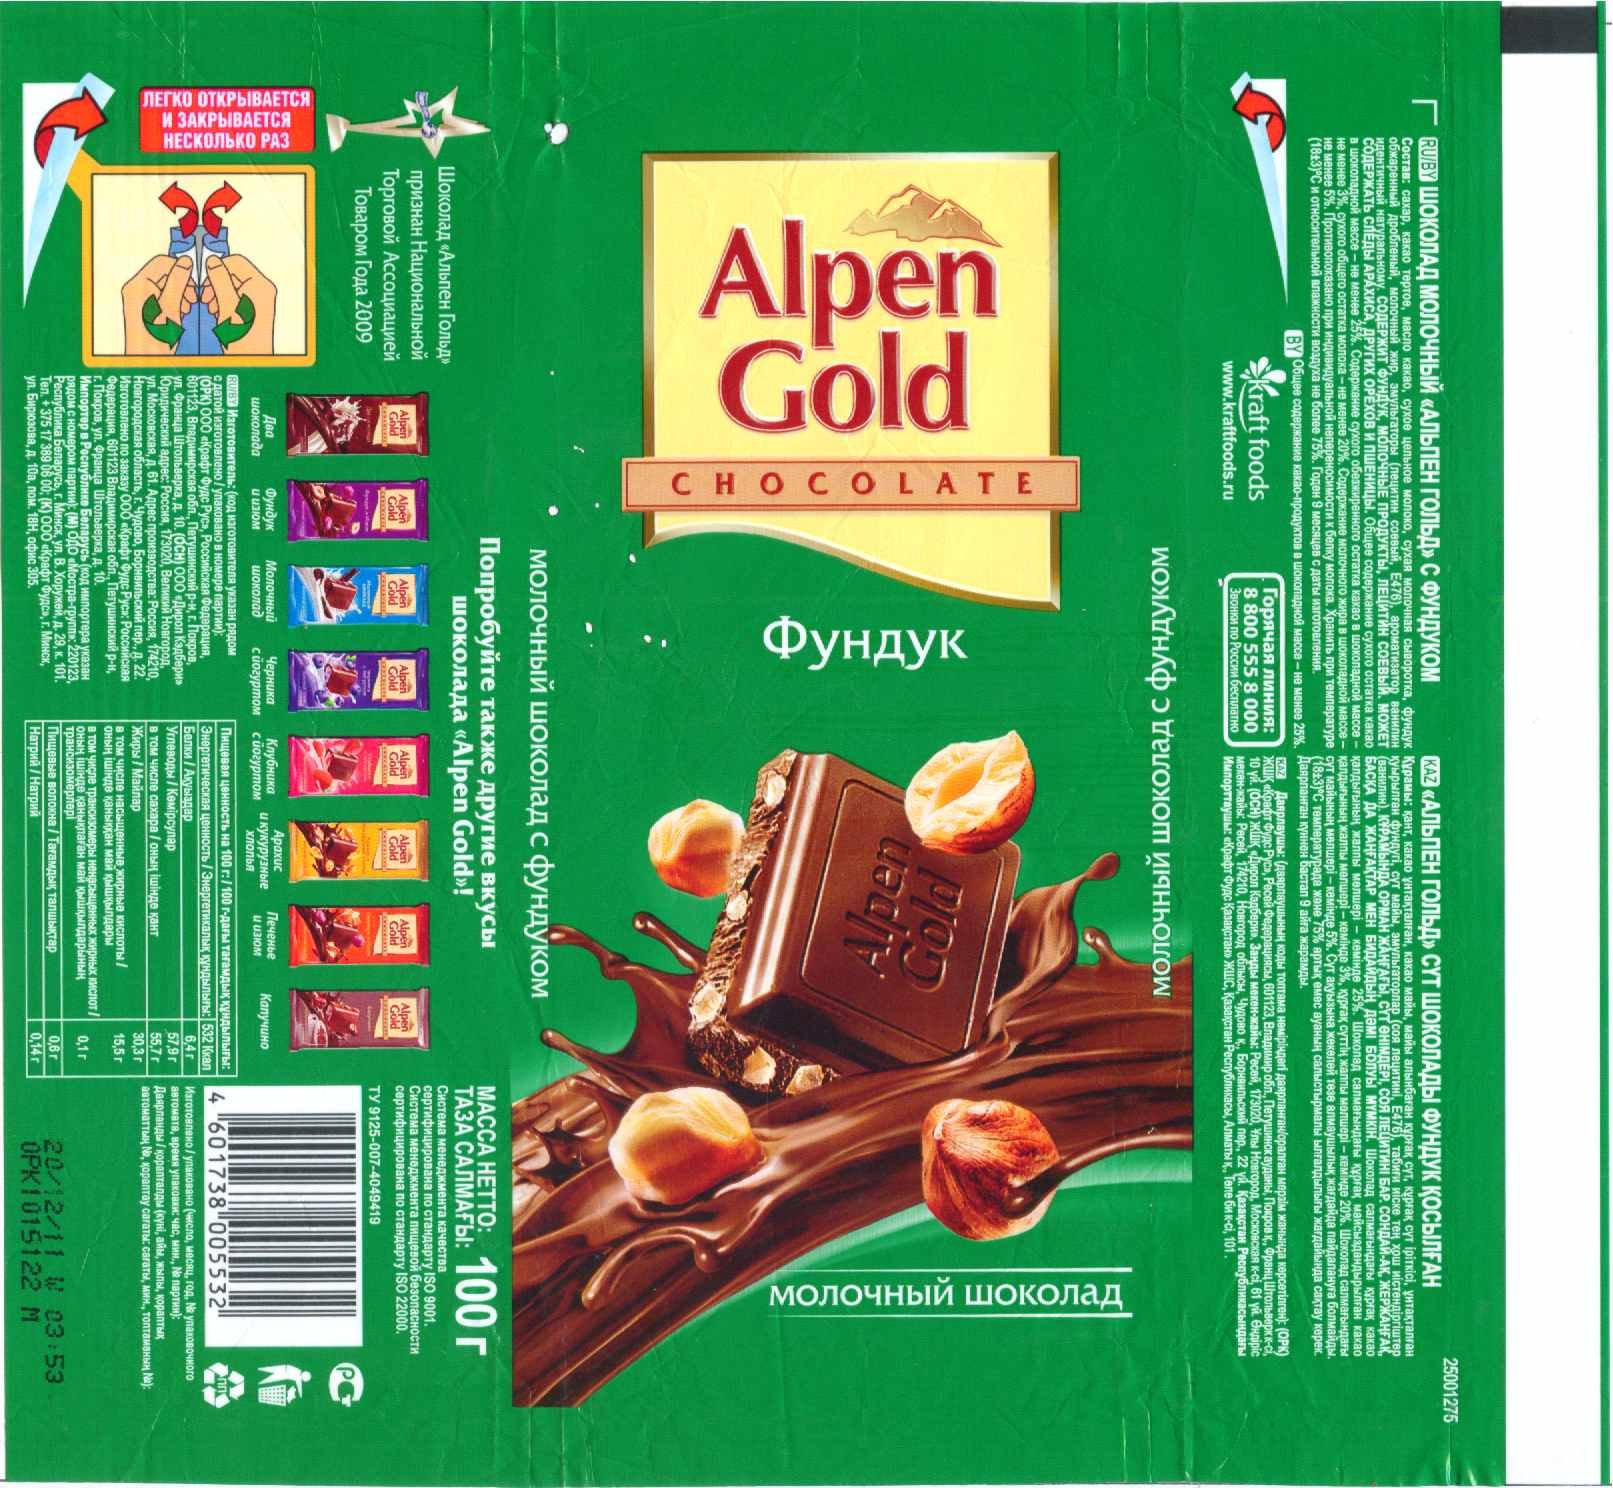 Размеры шоколада. Шоколад Альпен Гольд молочный этикетка 85гр. Альпен Гольд шоколад молочный 85 гр. Альпен Гольд шоколад ассортимент. Шоколад Alpen Gold 85гр. Молочный.